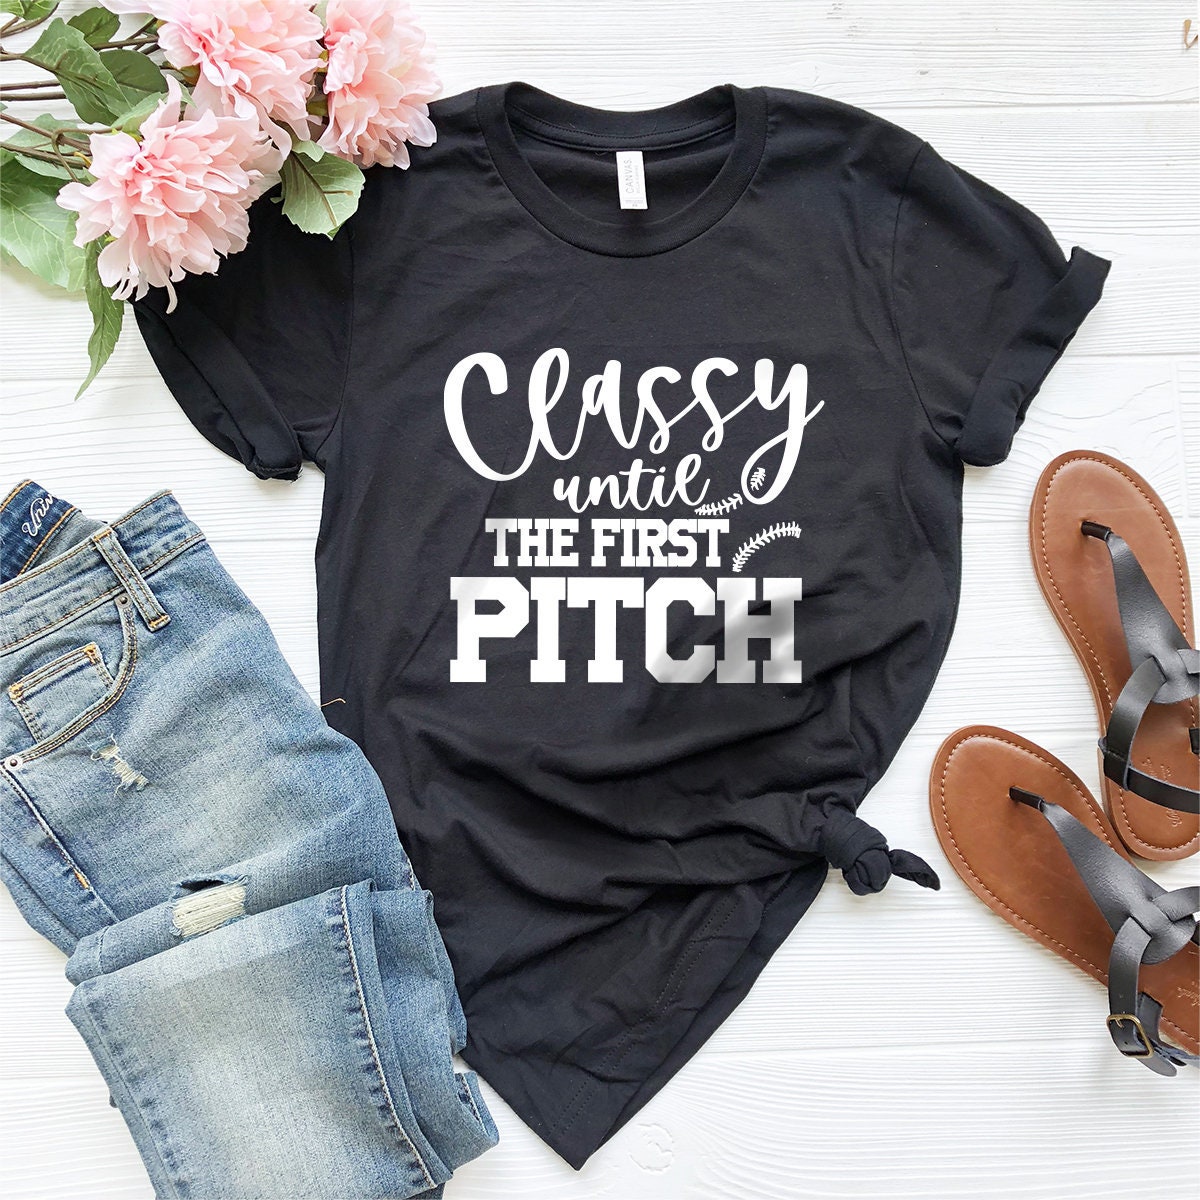 Softball Shirt, Baseball Tee, Classy Until The First Pitch Shirt - Fastdeliverytees.com